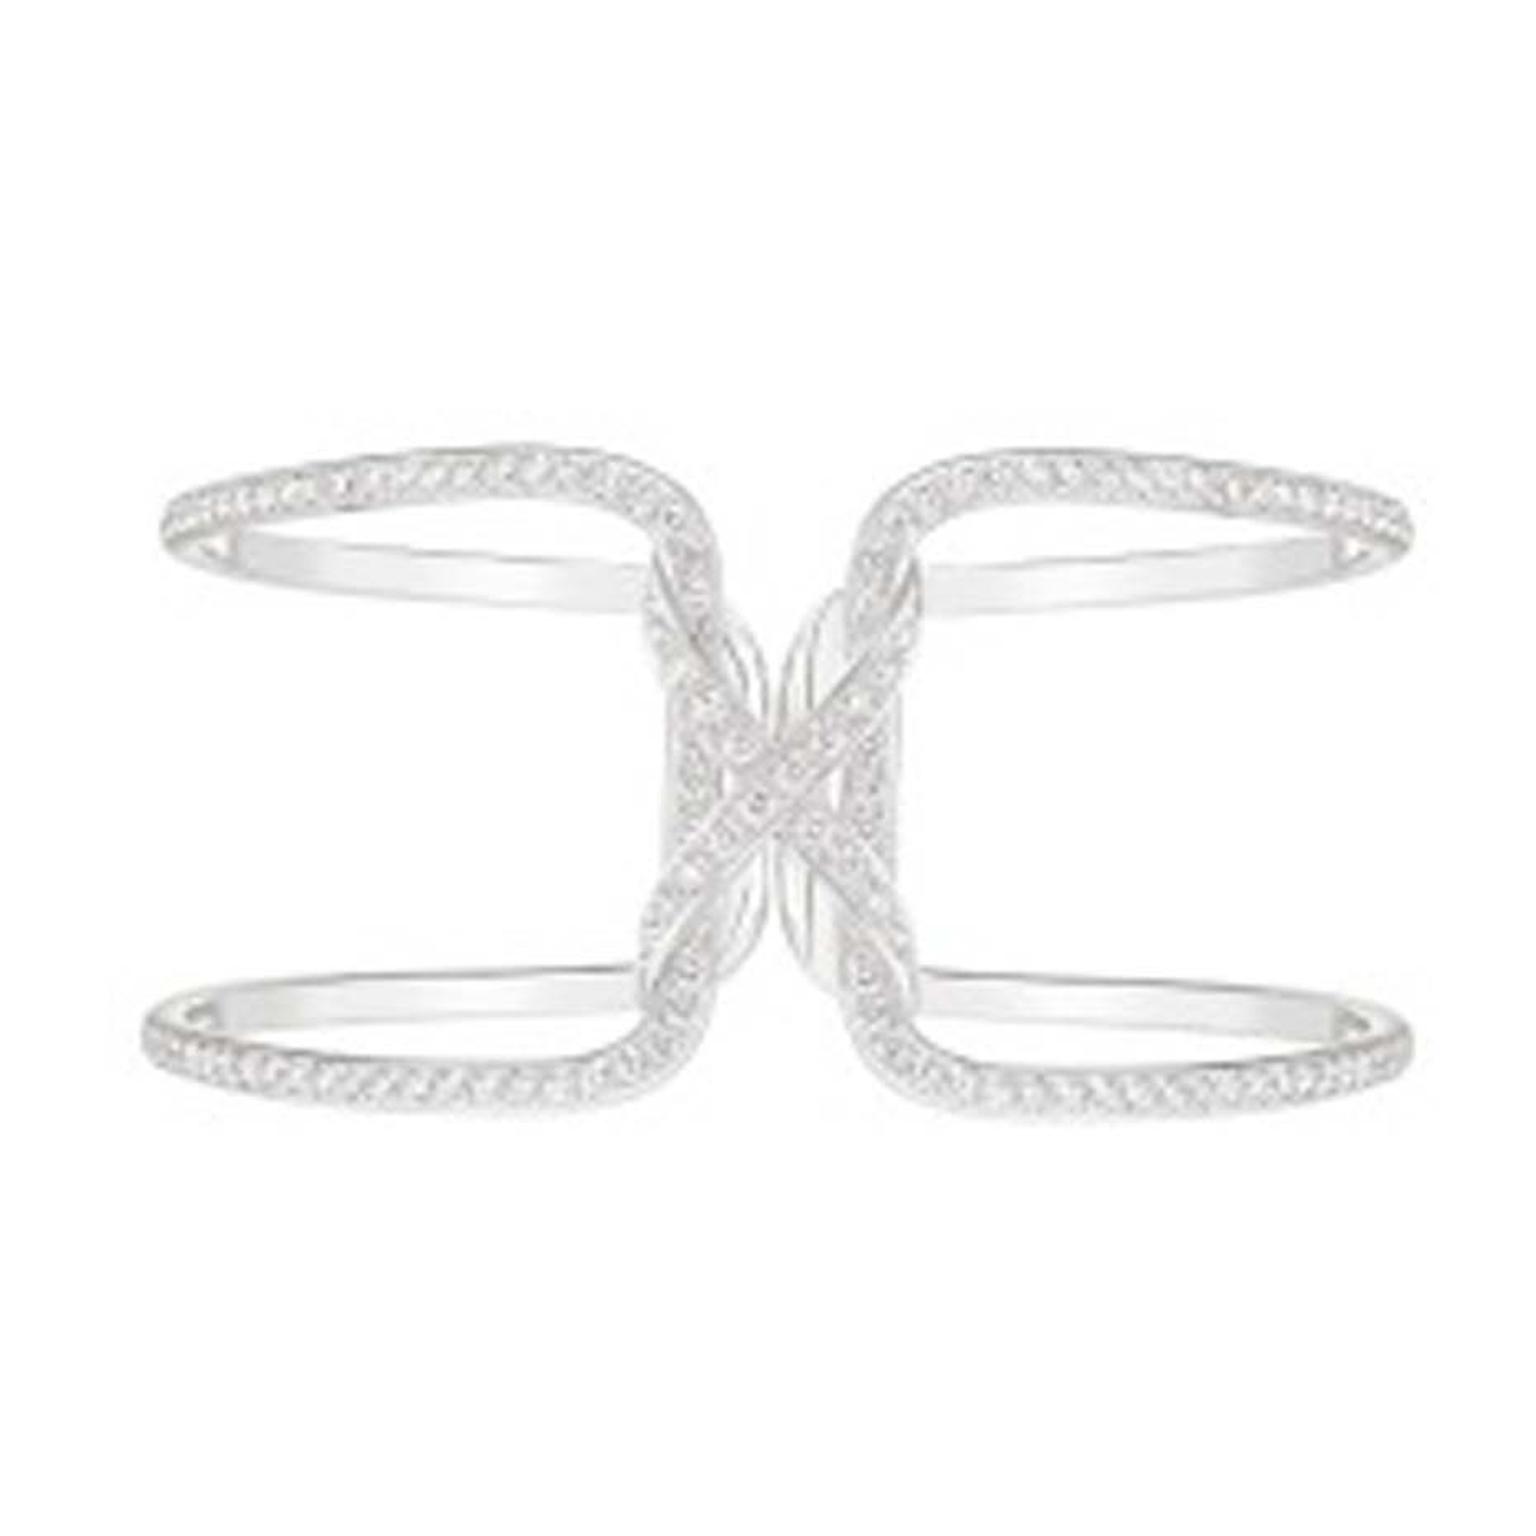 Chaumet Manchette diamond bracelet.